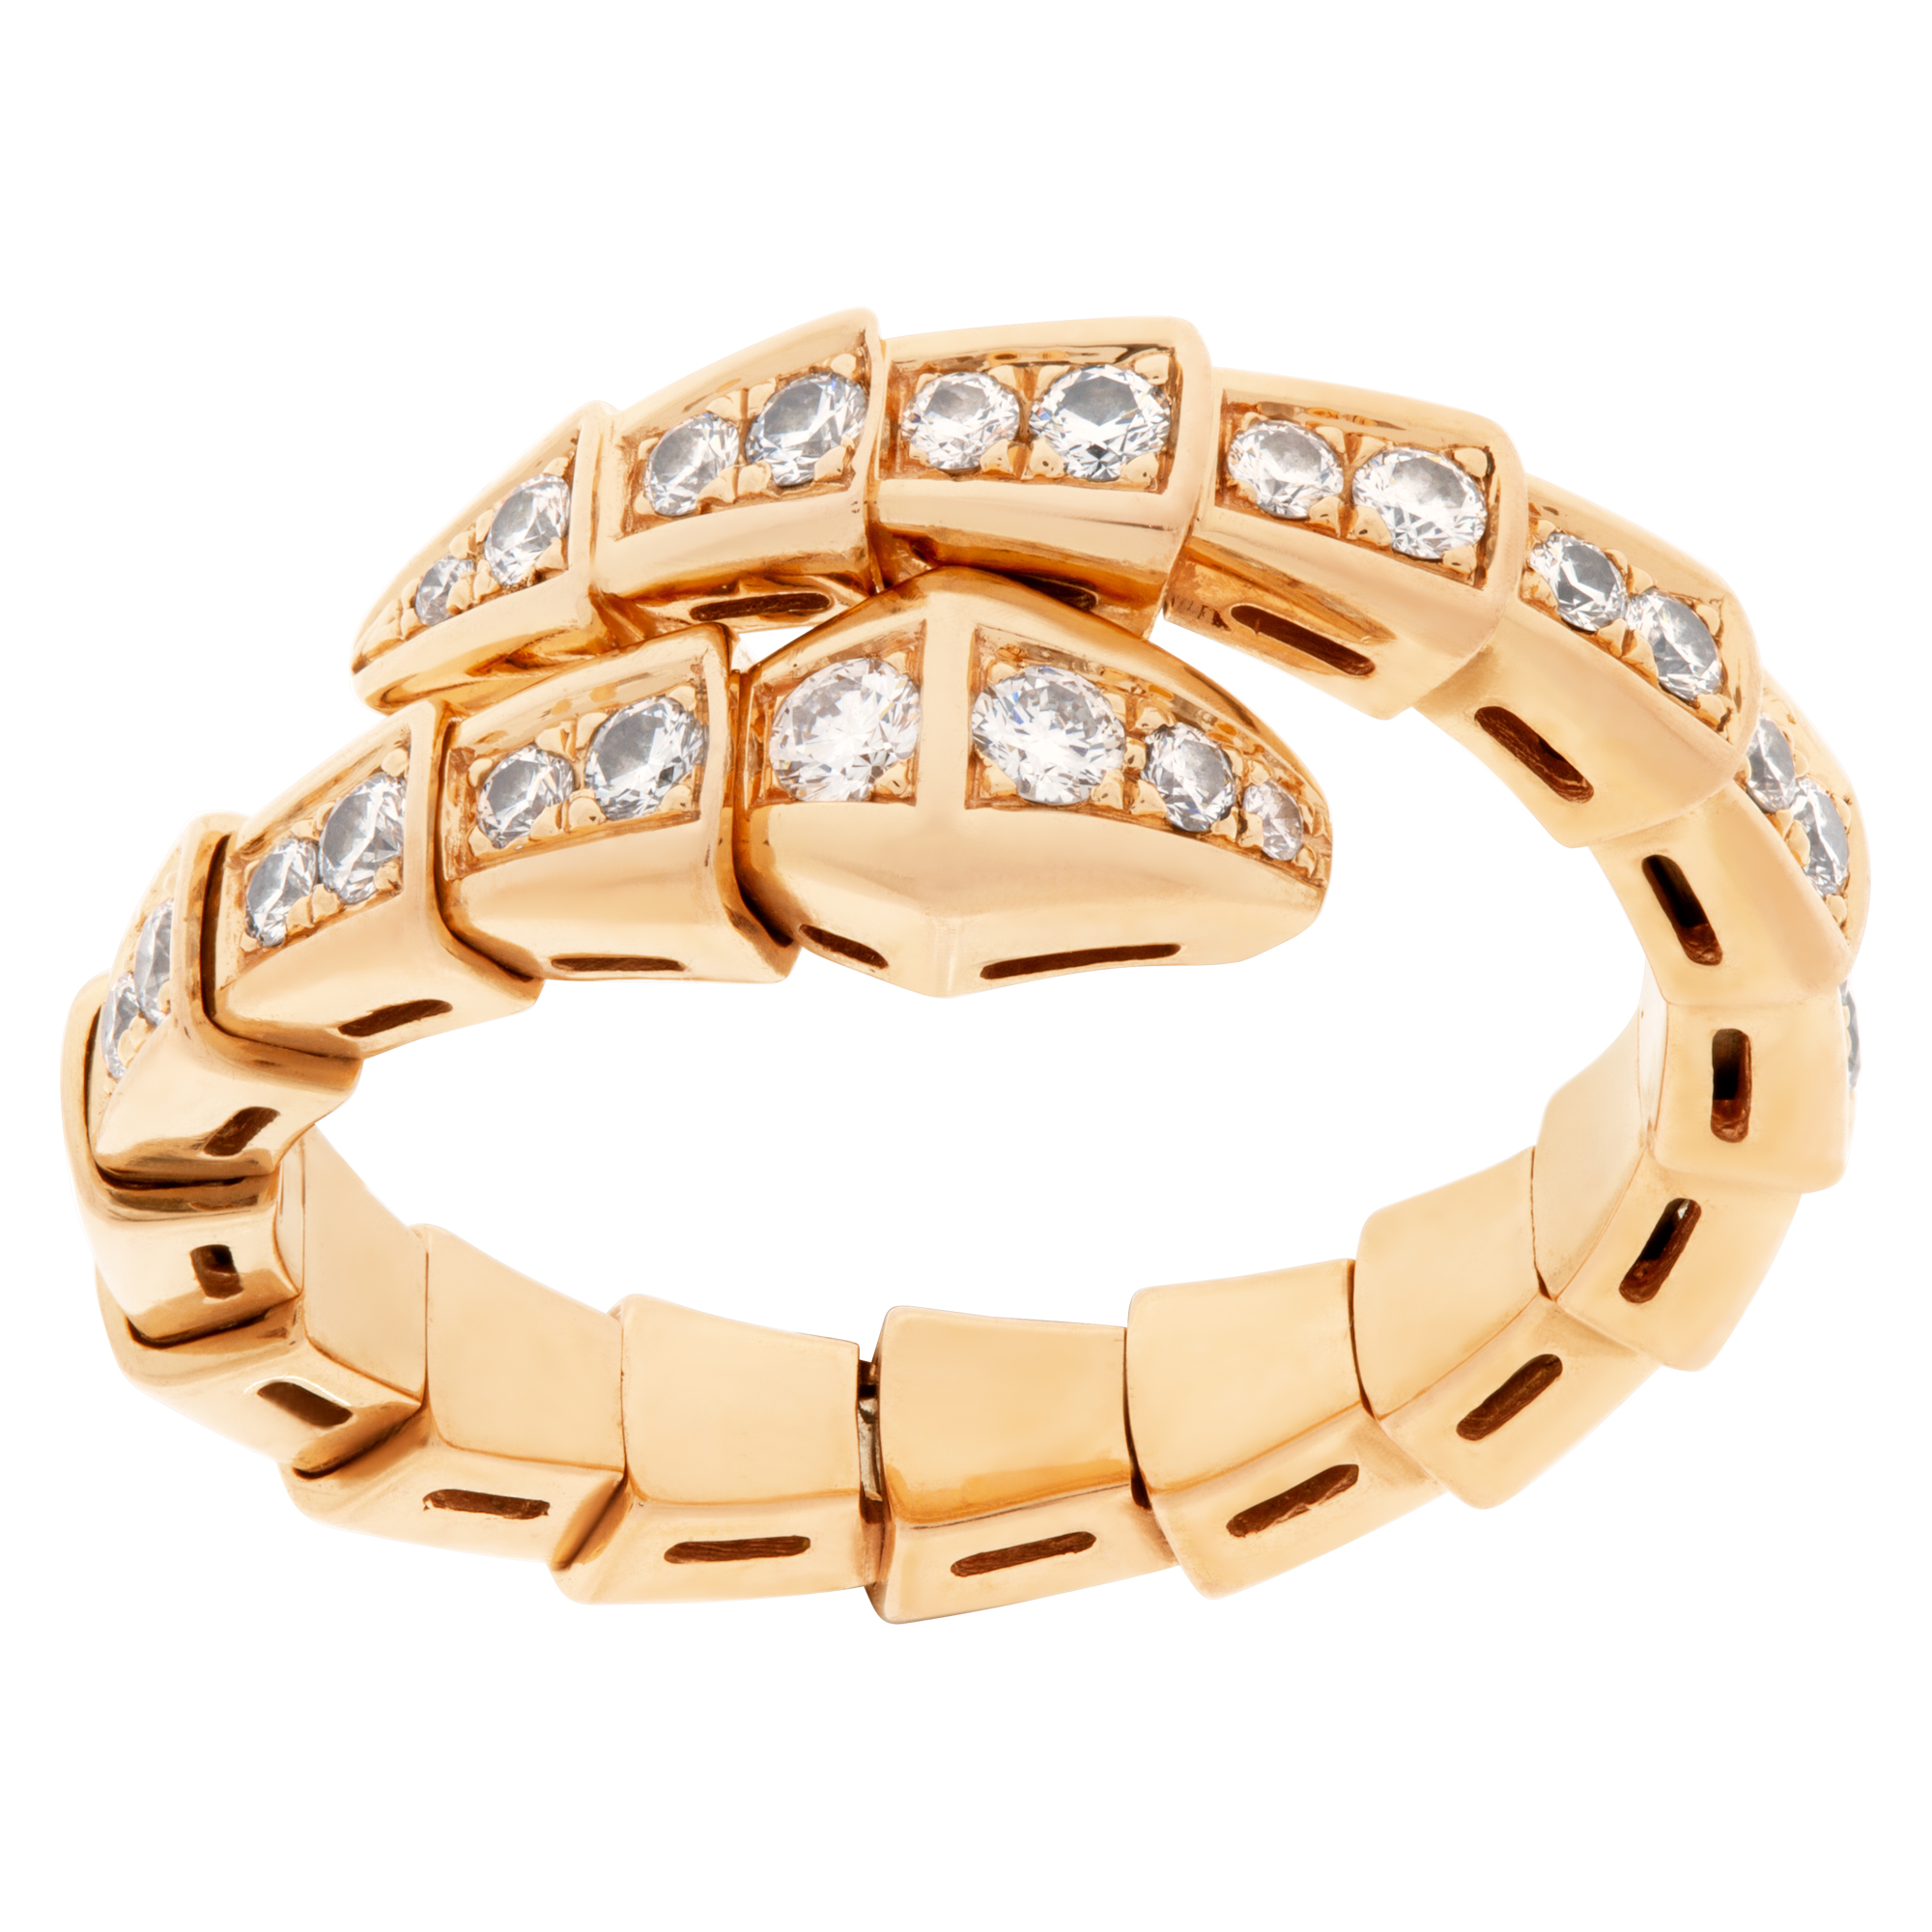 Bvlgari Serpenti Viper Ring in 18k rose gold and diamonds